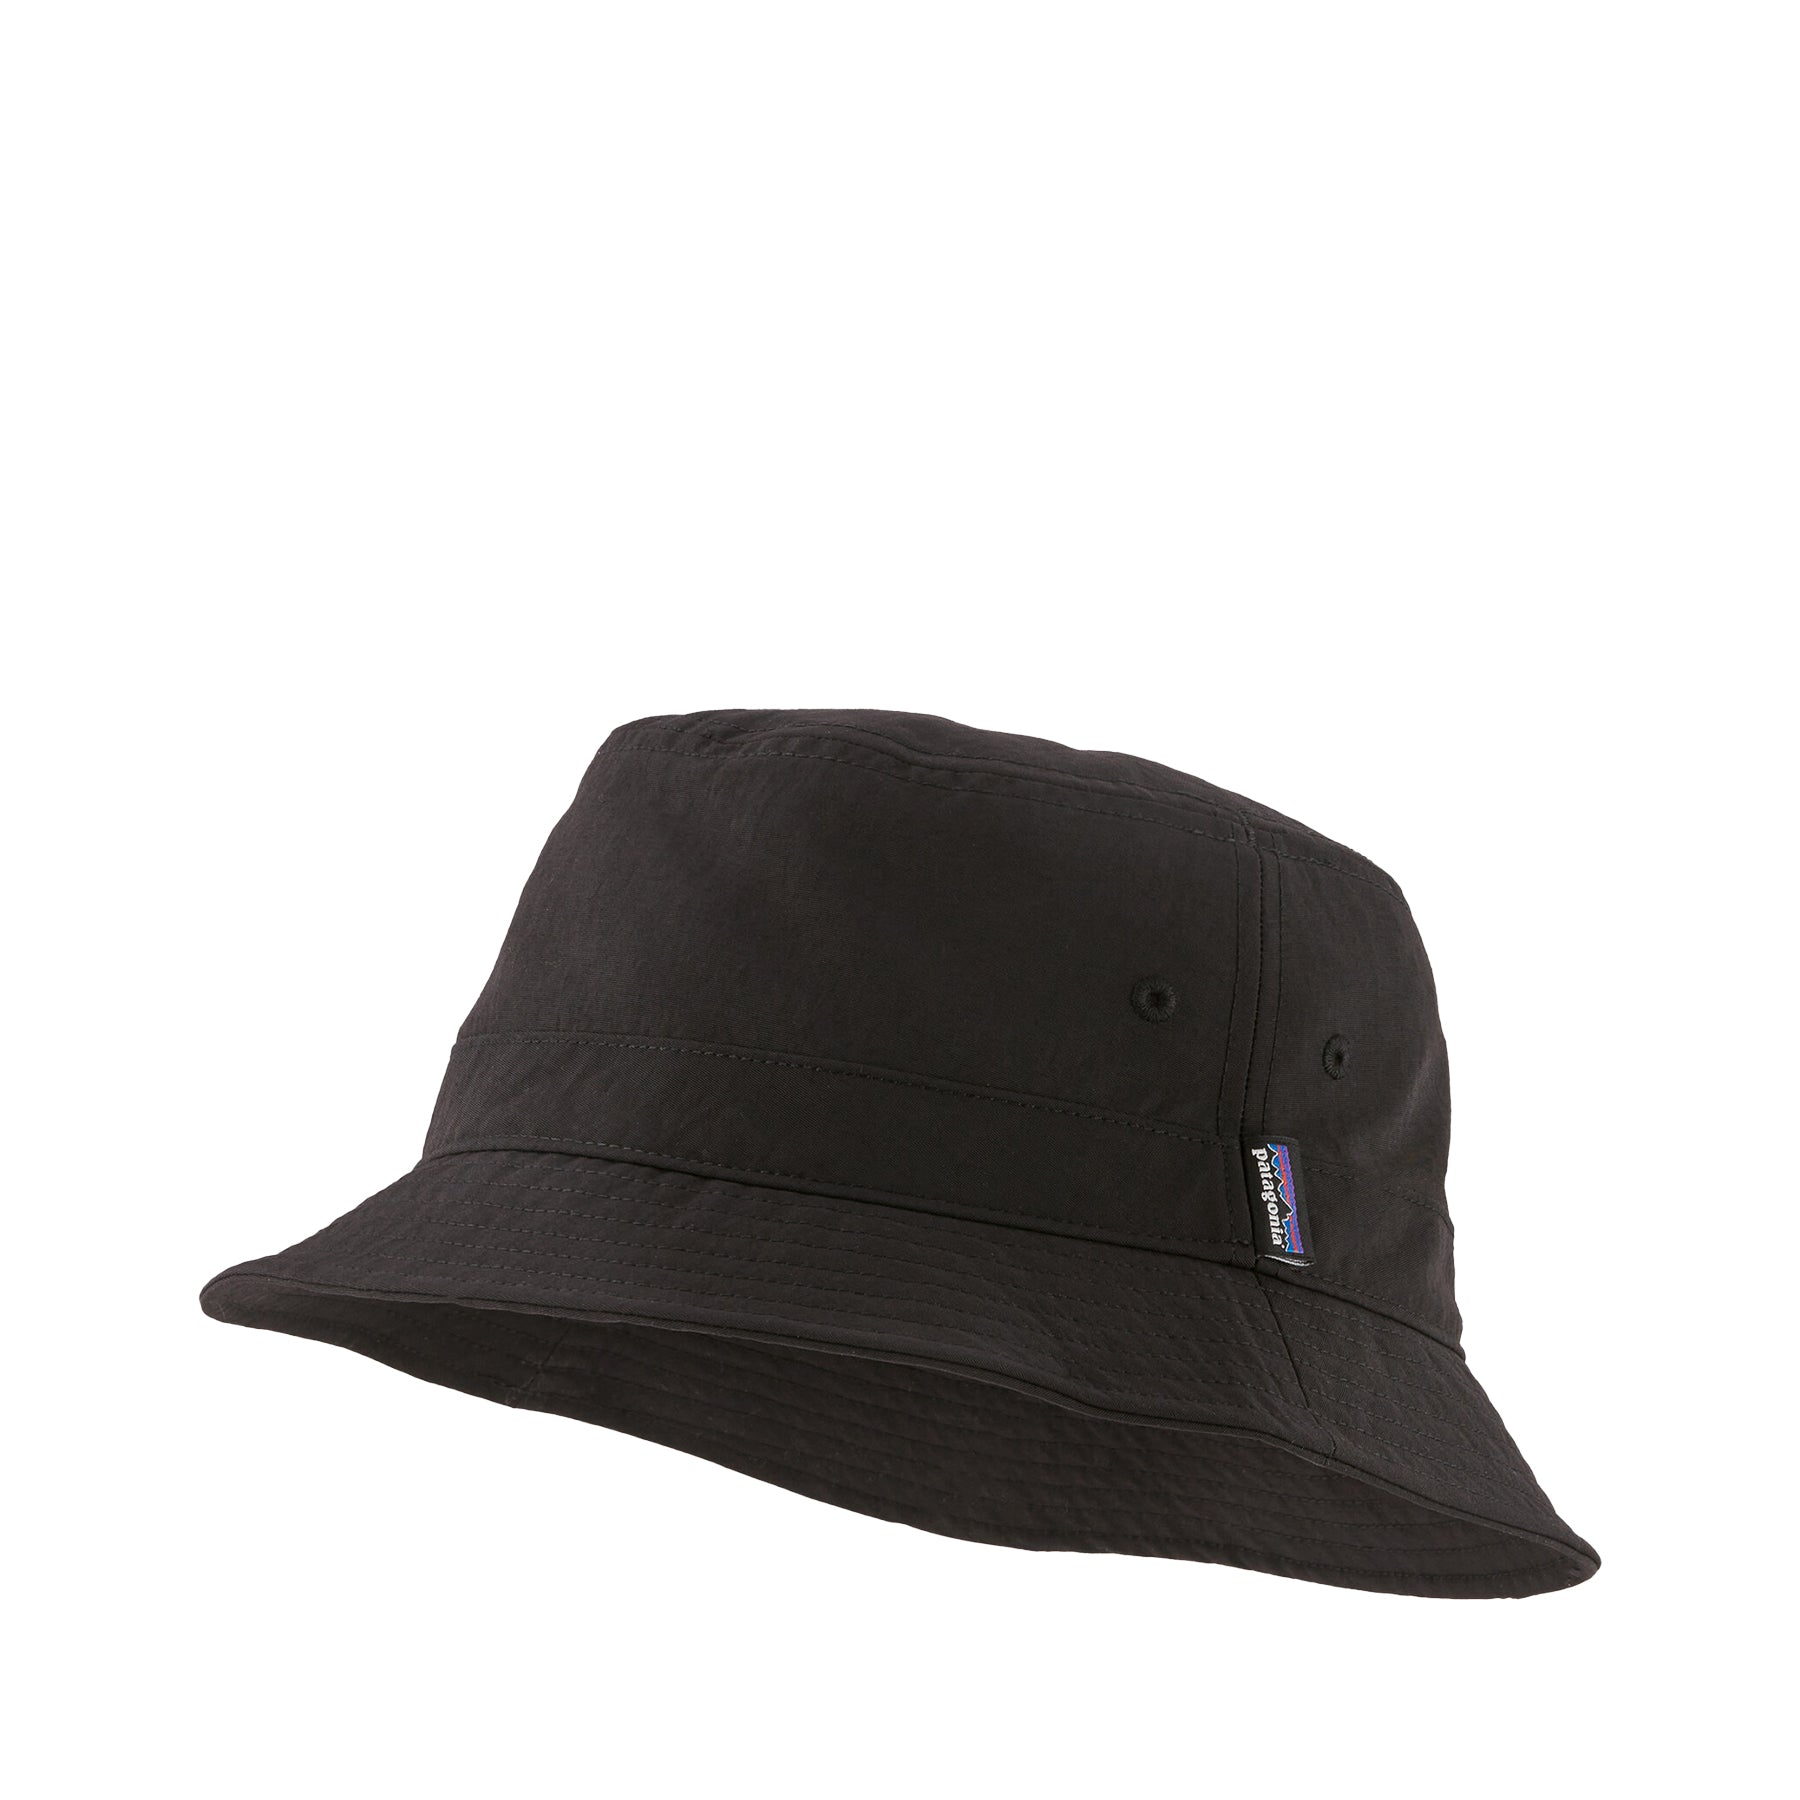 Wavefarer bucket hat